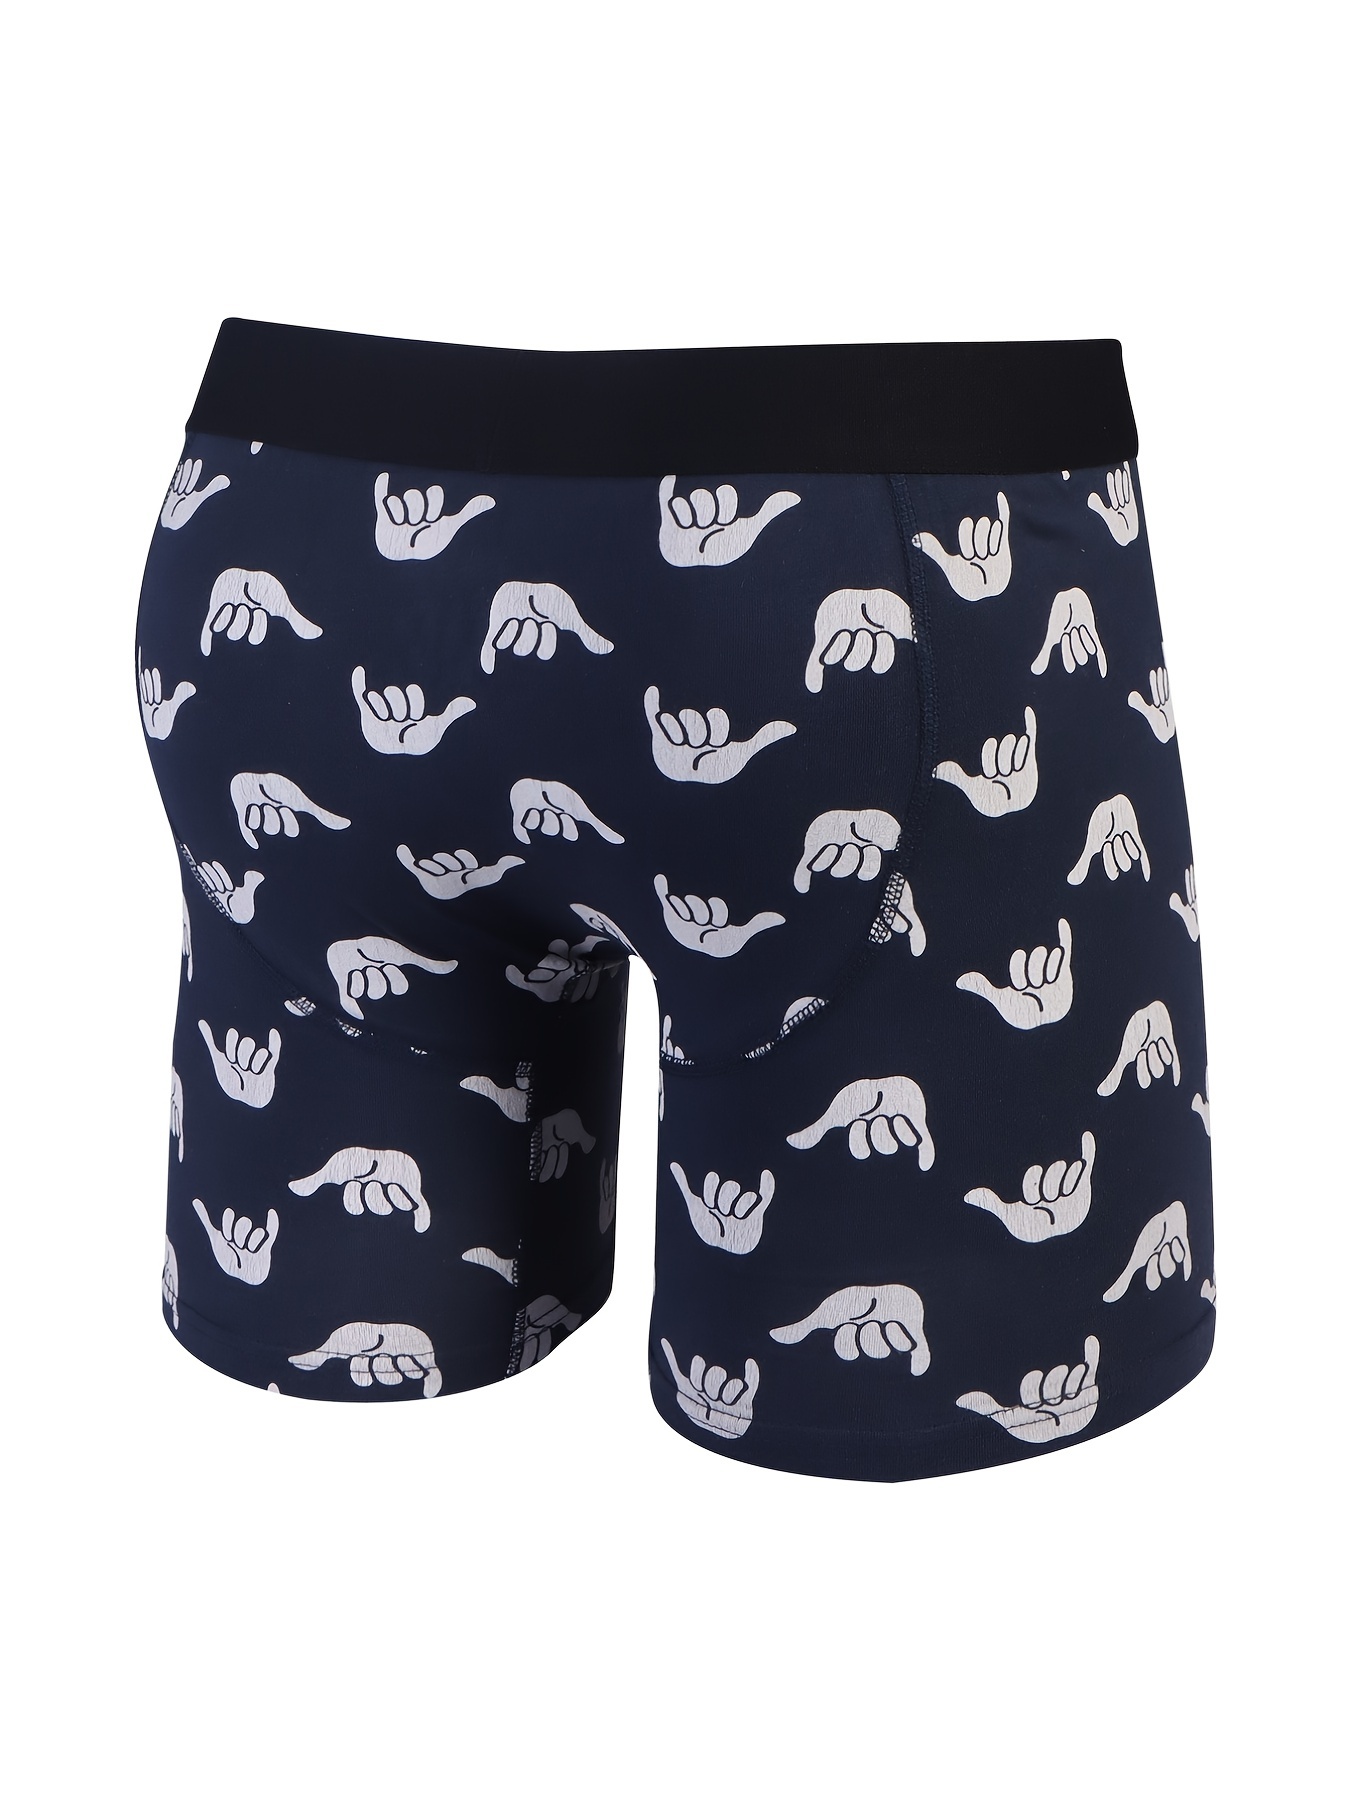 Elephant Print Mens Boxer Briefs Breathable Underpants For Comfort